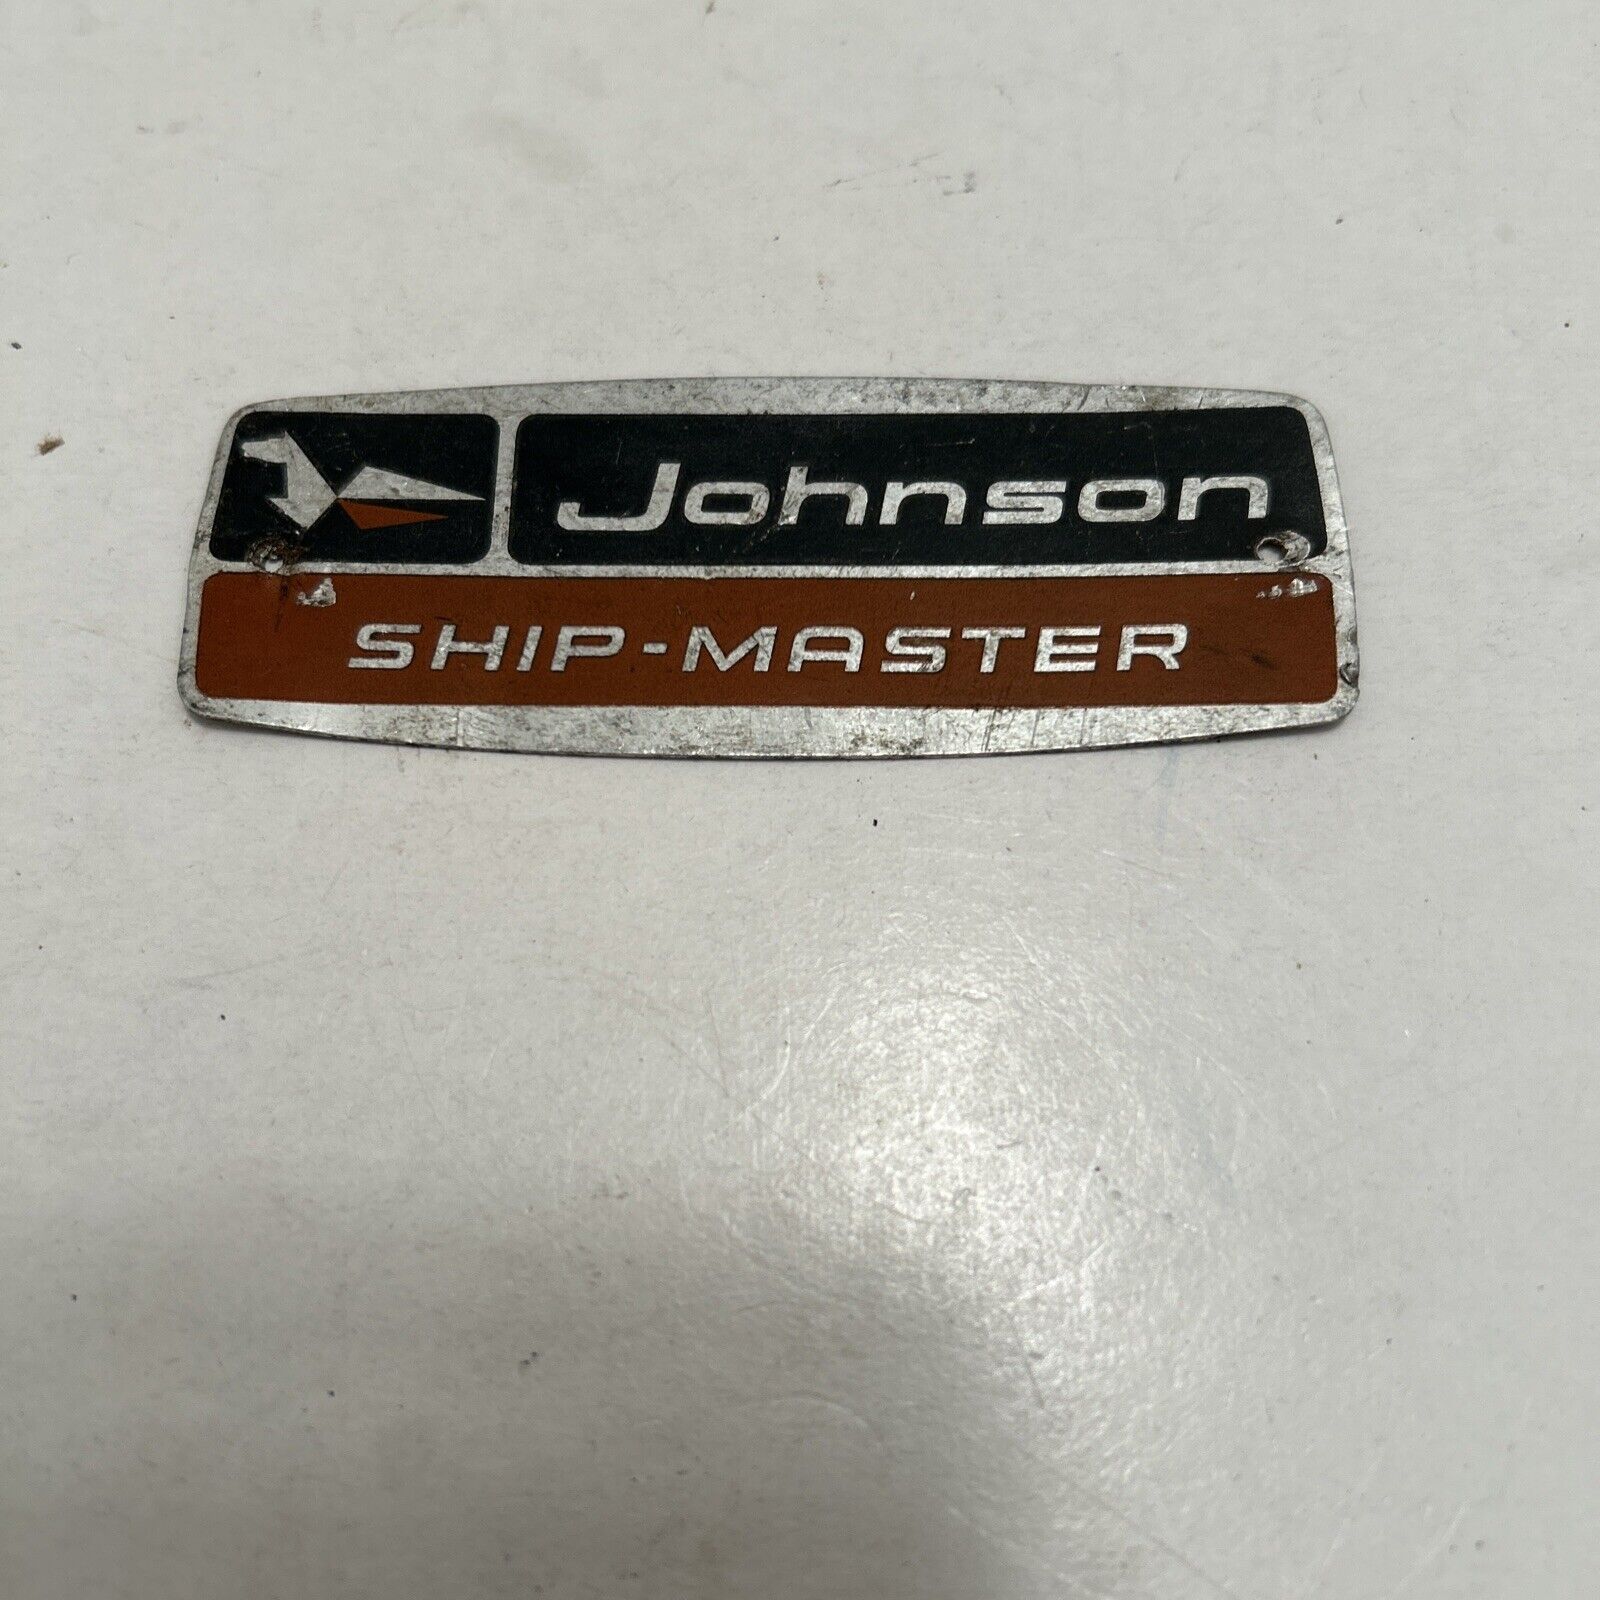 Vintage Johnson Outboard Motors   Ship-Master Metal Name Plate. Pre Owned